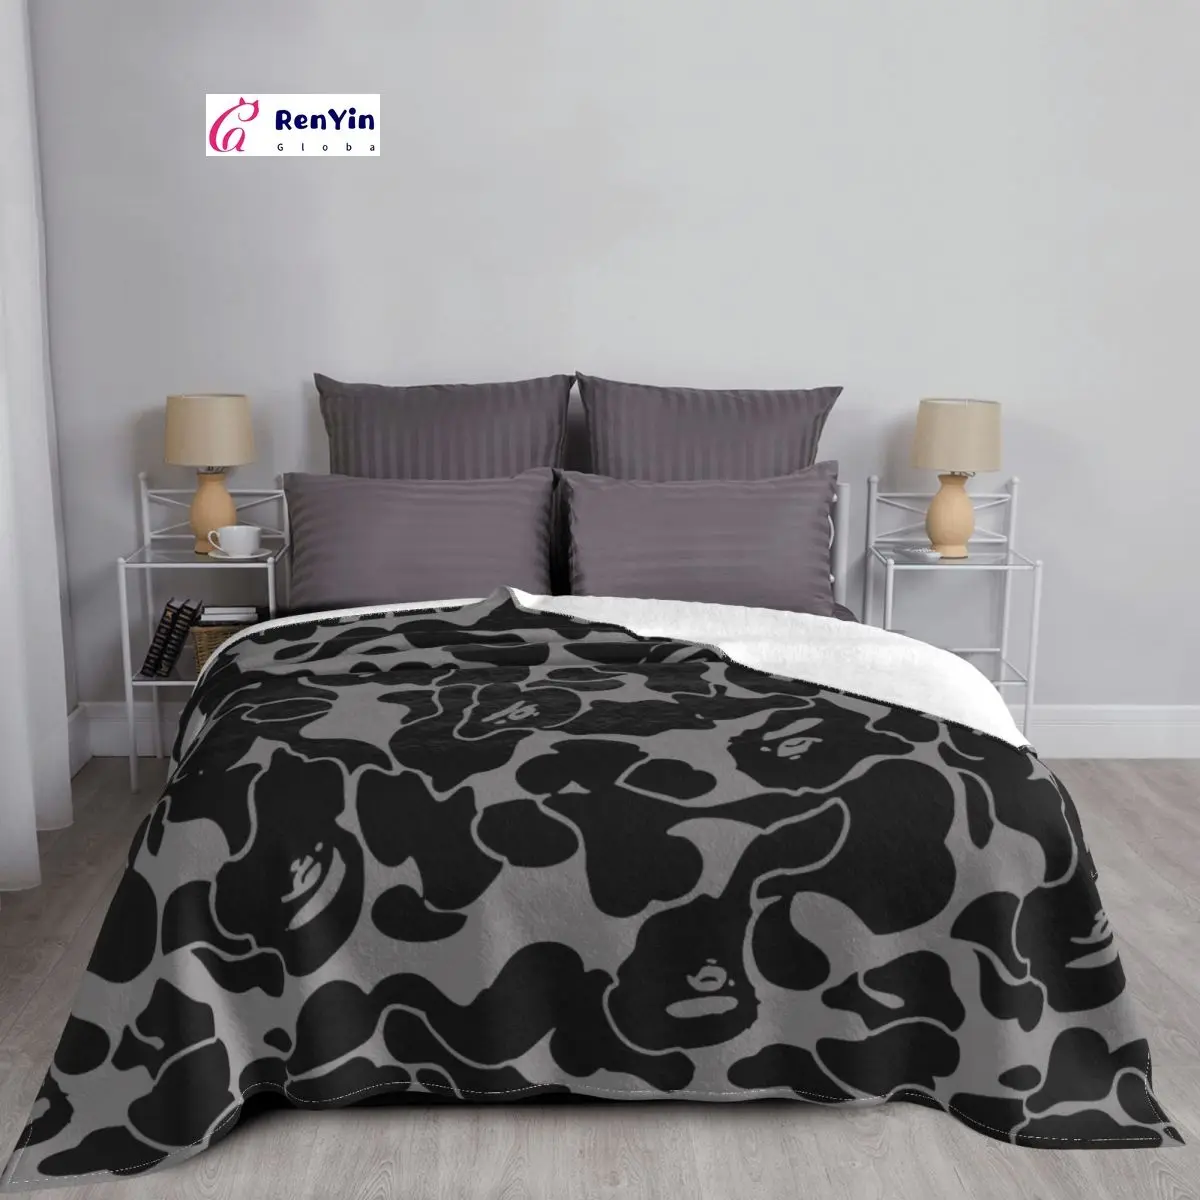 https://ae01.alicdn.com/kf/S2873e960470648c0b6965b366dc9ea26m/Camo-Bape-Blanket-Camouflage-Military-Bedspread-Plush-Soft-Cover-flannel-blanket-Spread-Bedding-Sofa-Picnic.jpg